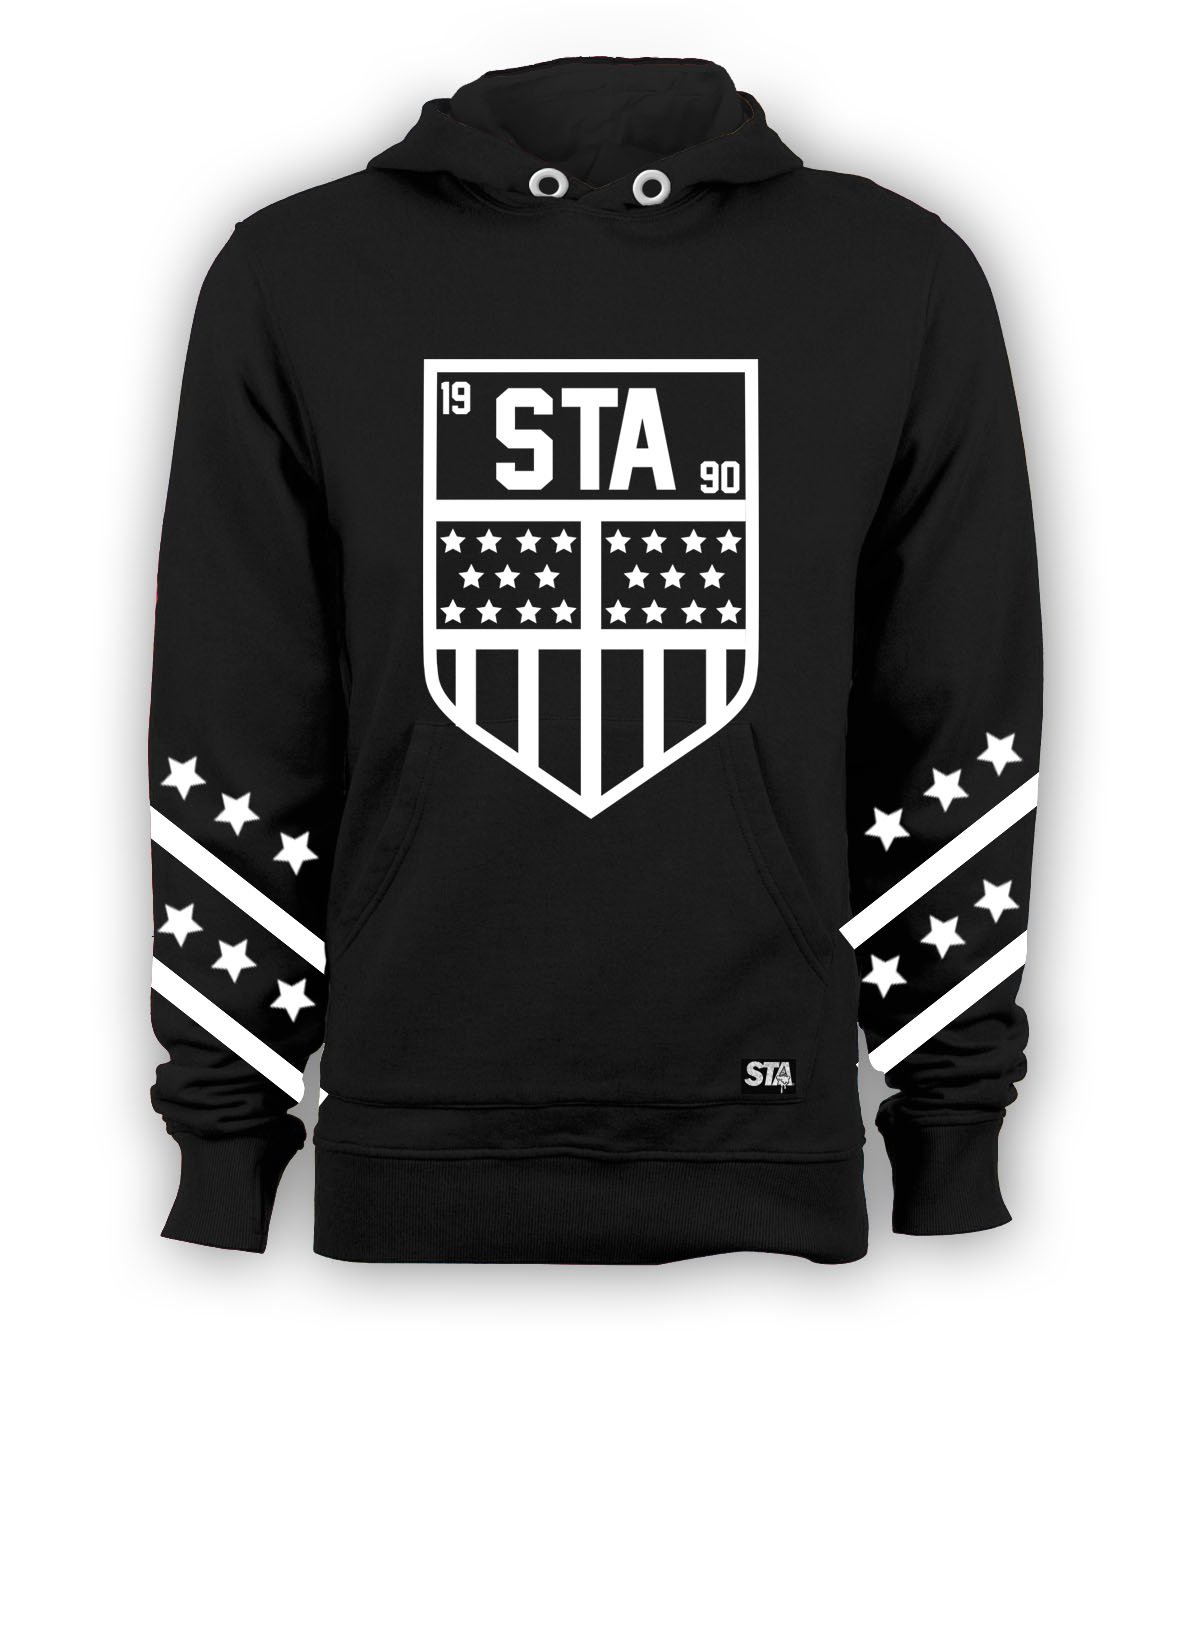 Image of Sta Badge T shirt Hoody Black 